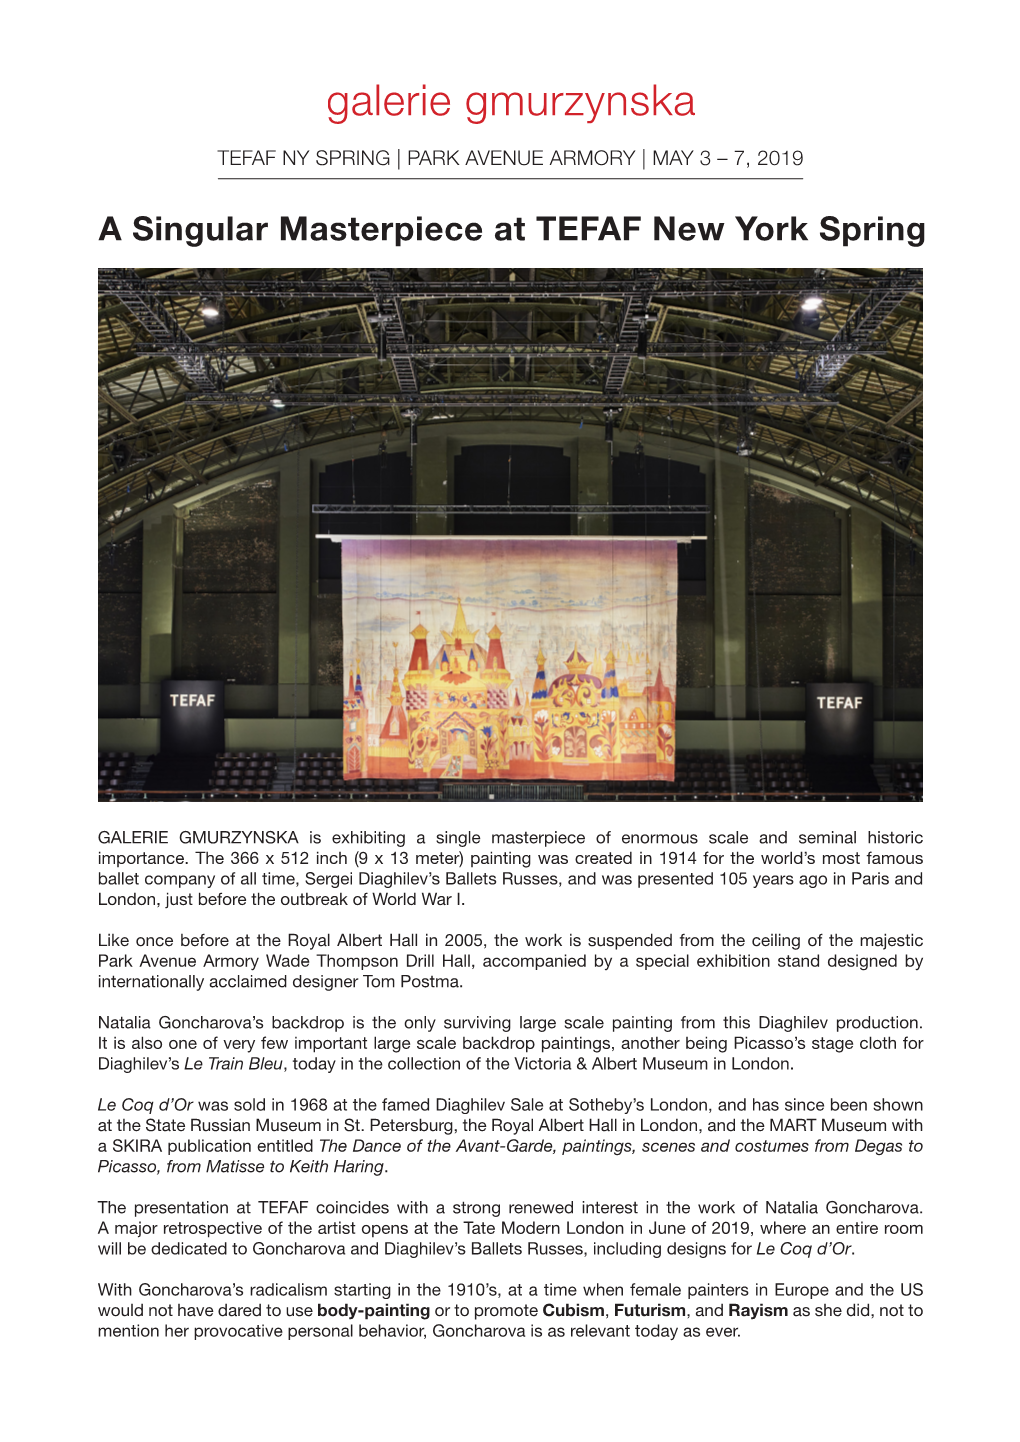 A Singular Masterpiece at TEFAF New York Spring